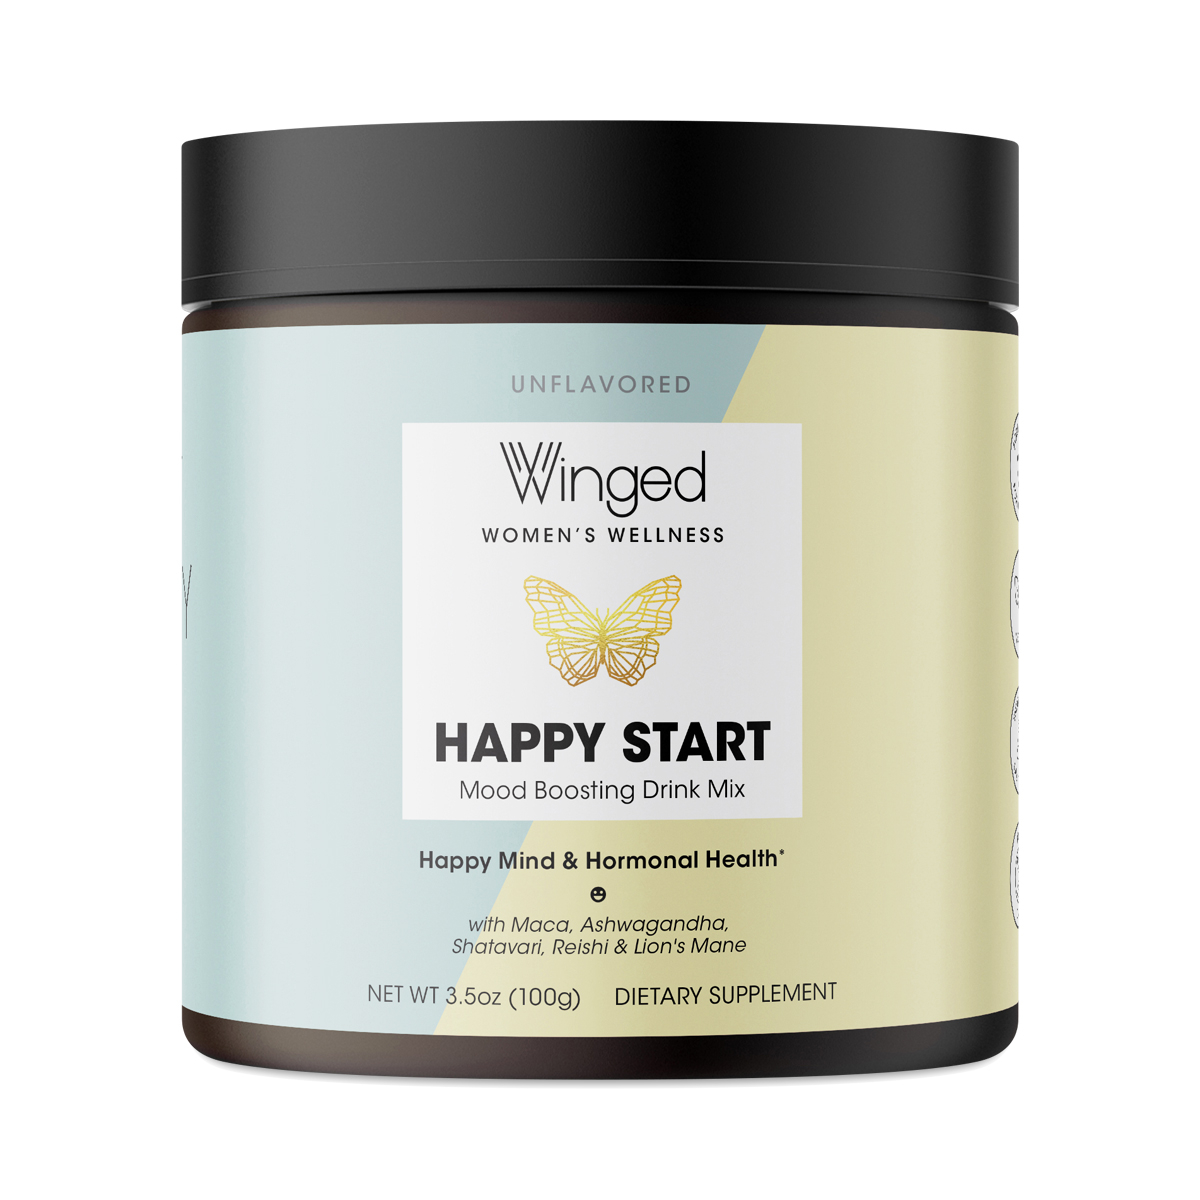 Winged Happy Start Mood Boosting Drink Mix 3.5 oz bottle